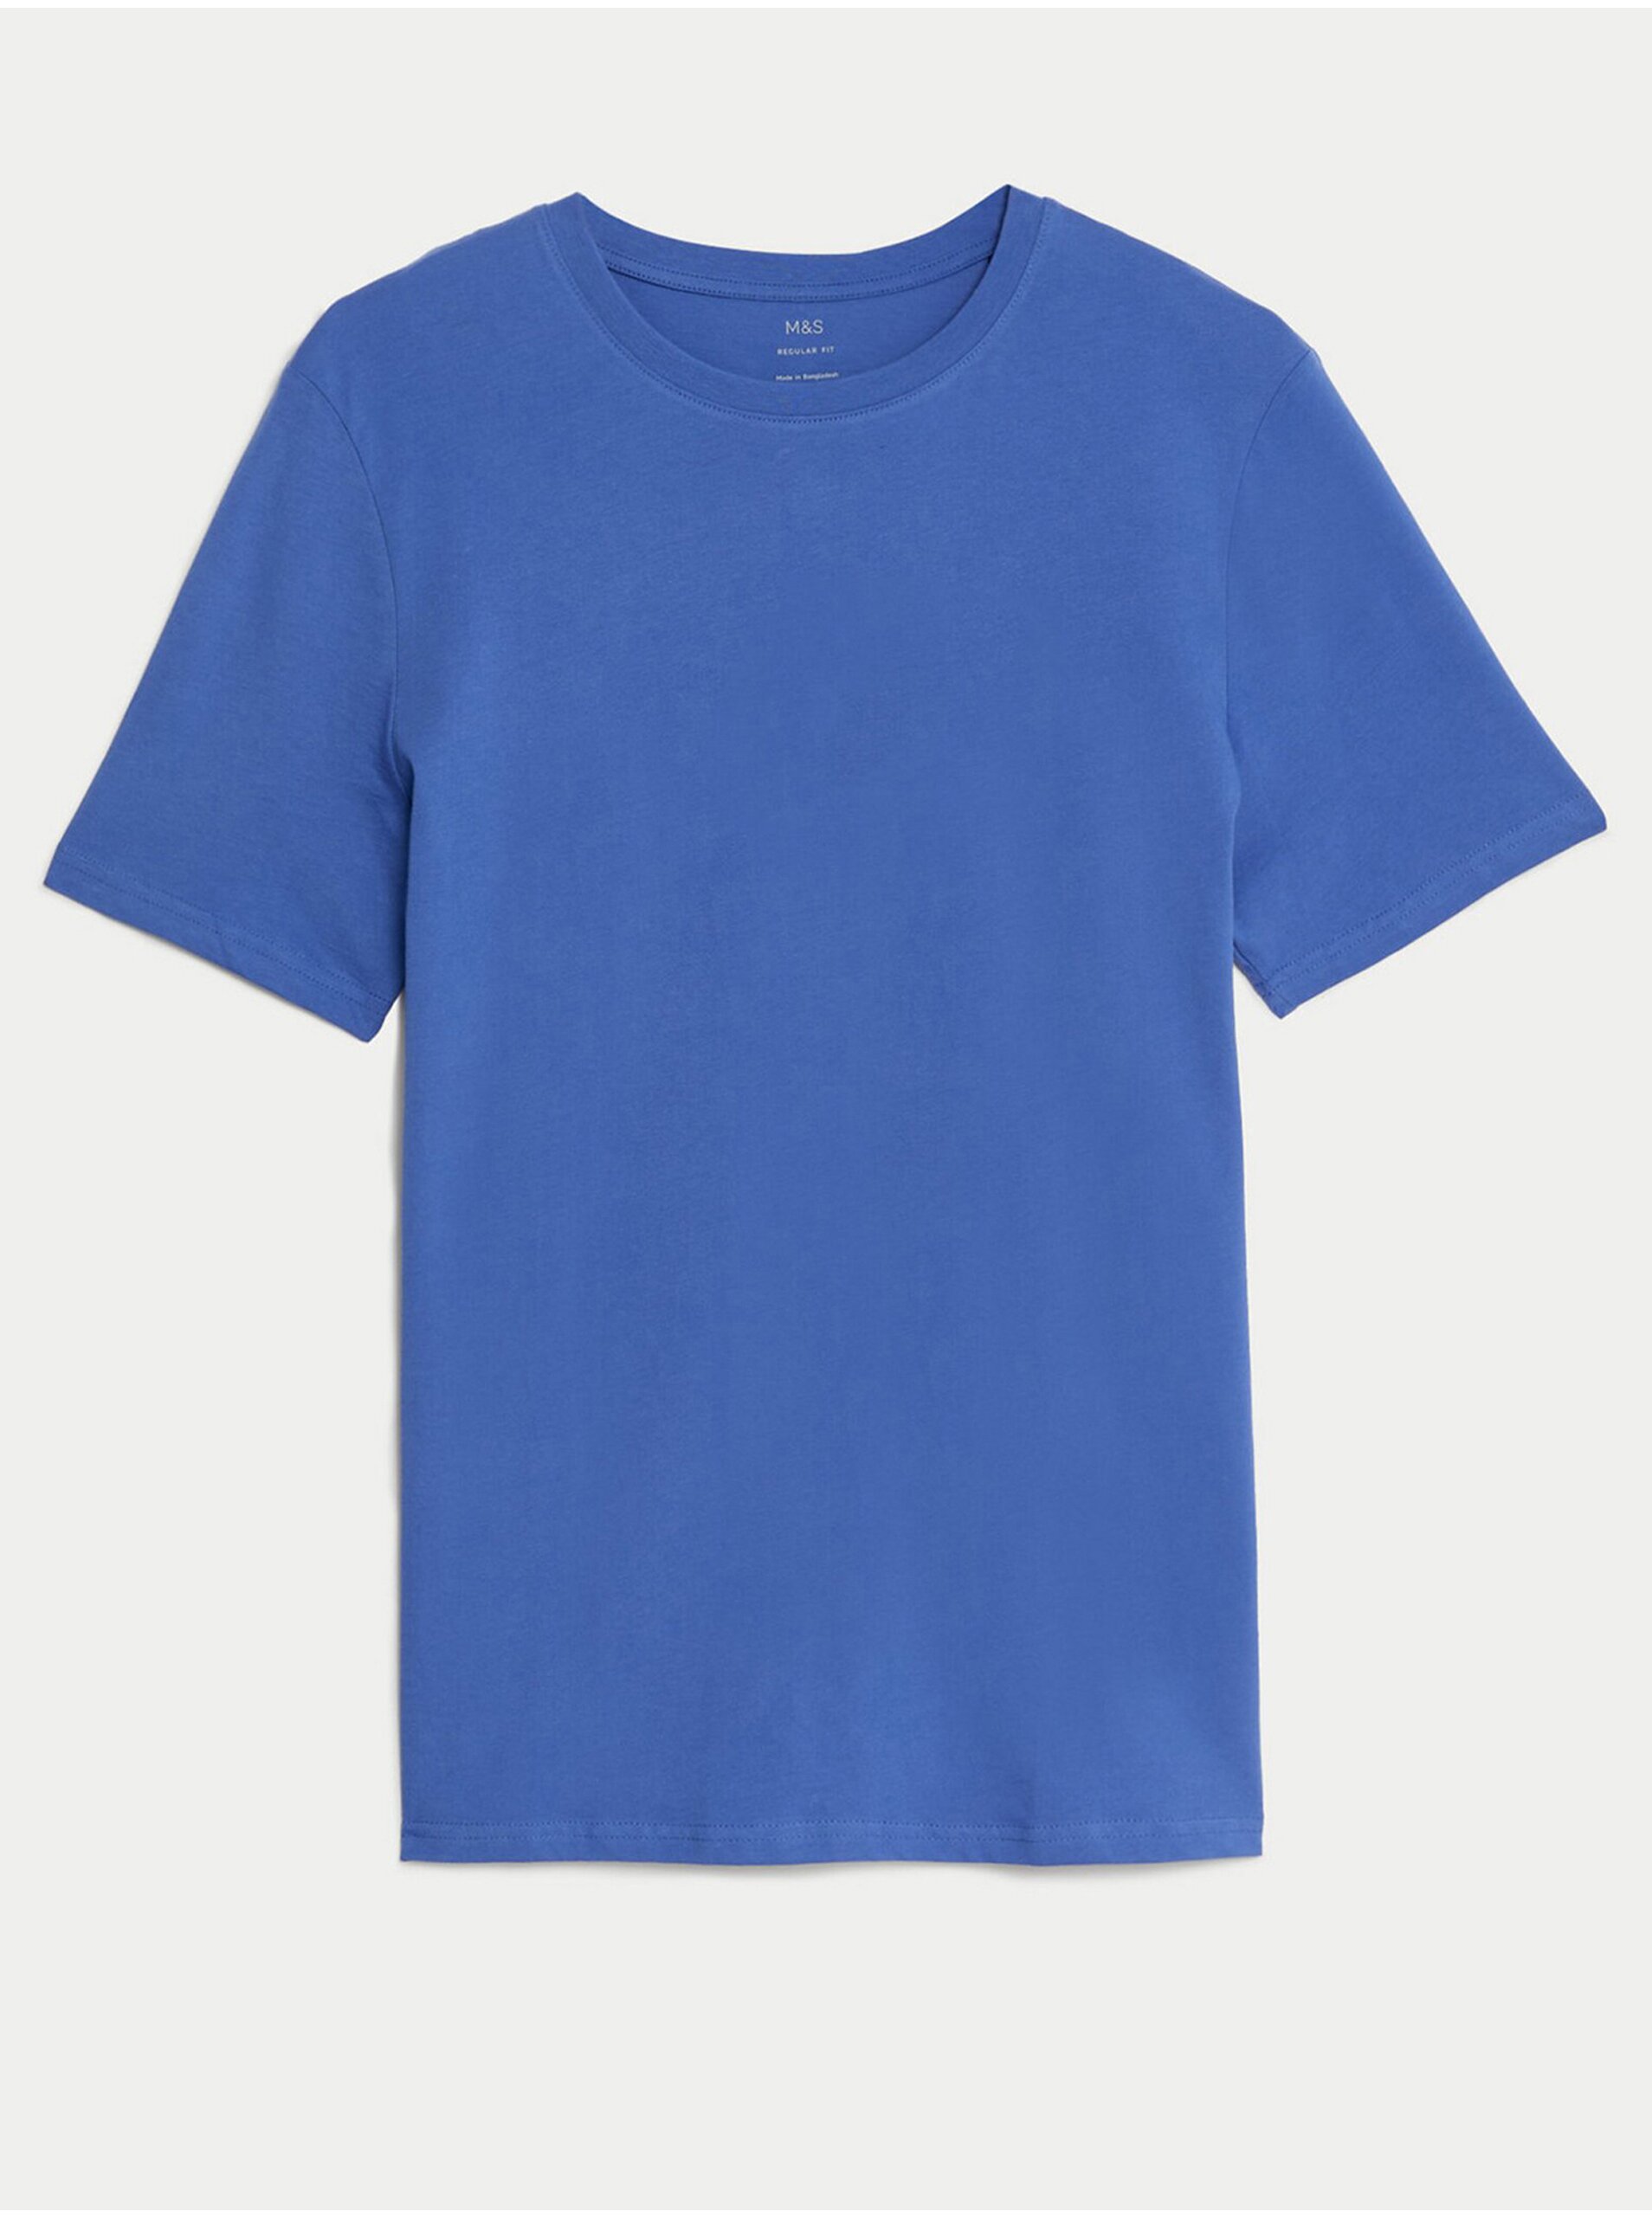 Lacno Modré pánske basic tričko Marks & Spencer